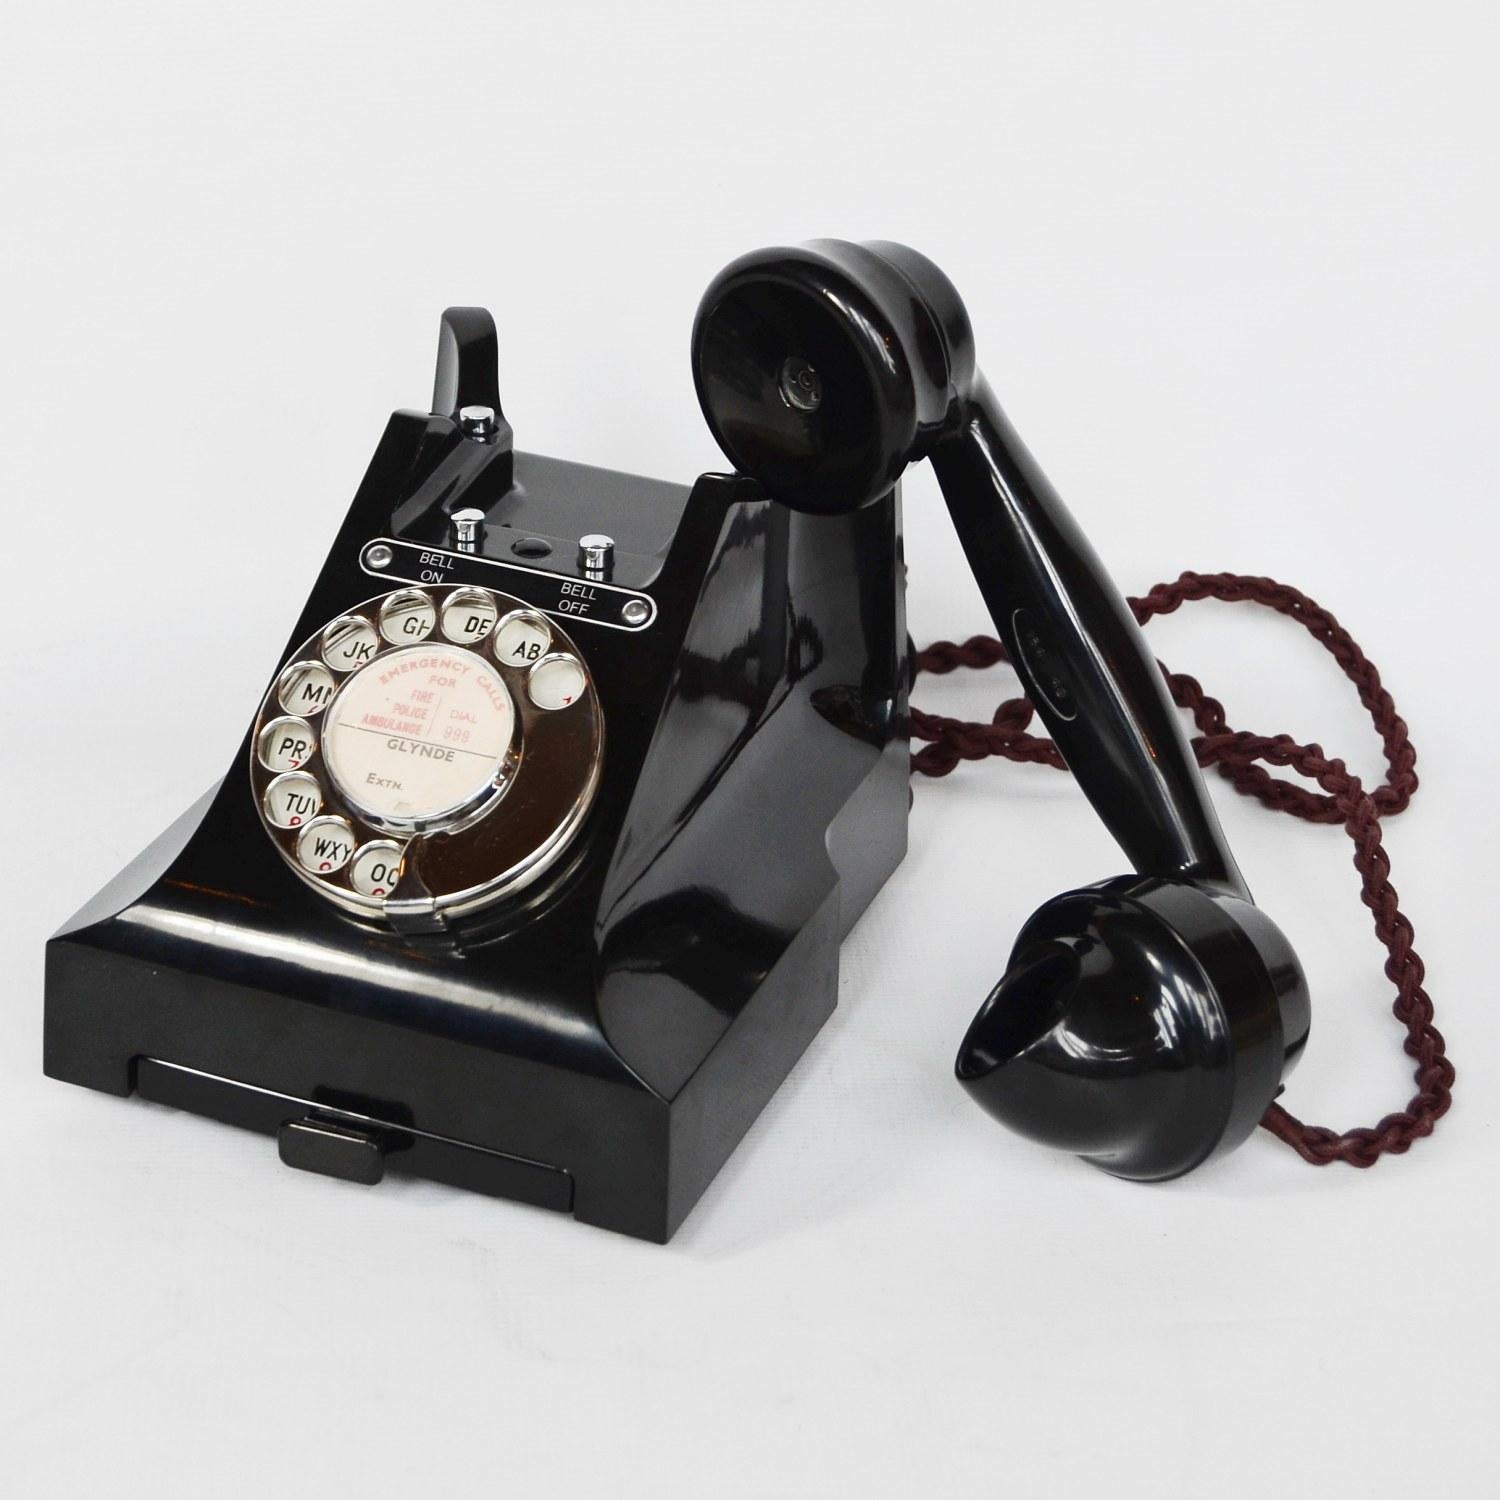 English Original GPO Model 328L Black Bakelite Telephone Full Working Order